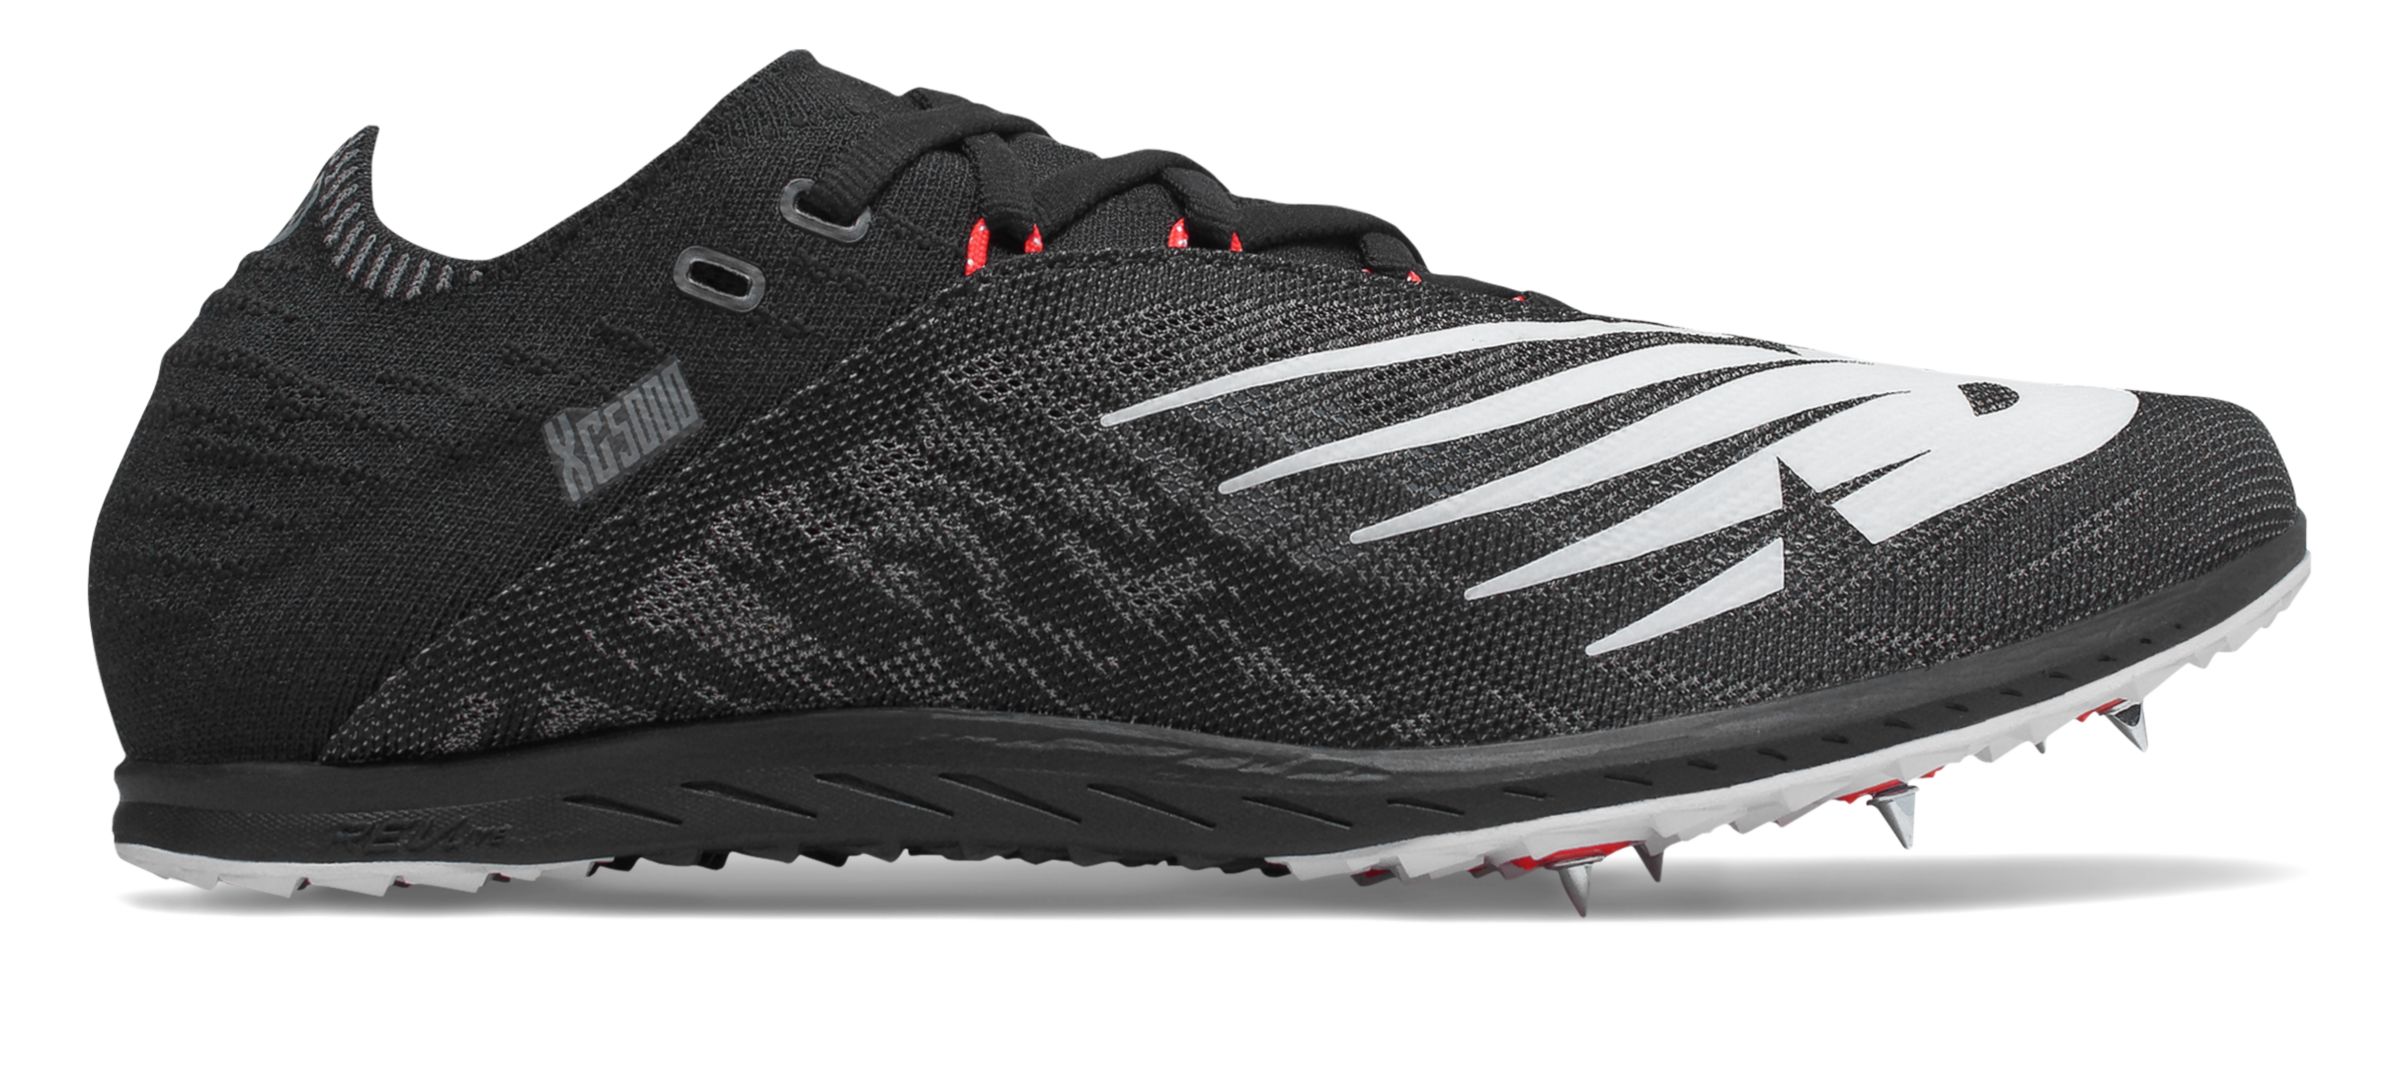 New Balance Unisex XC5K v5 Track Spikes Shoes Black with Red | eBay